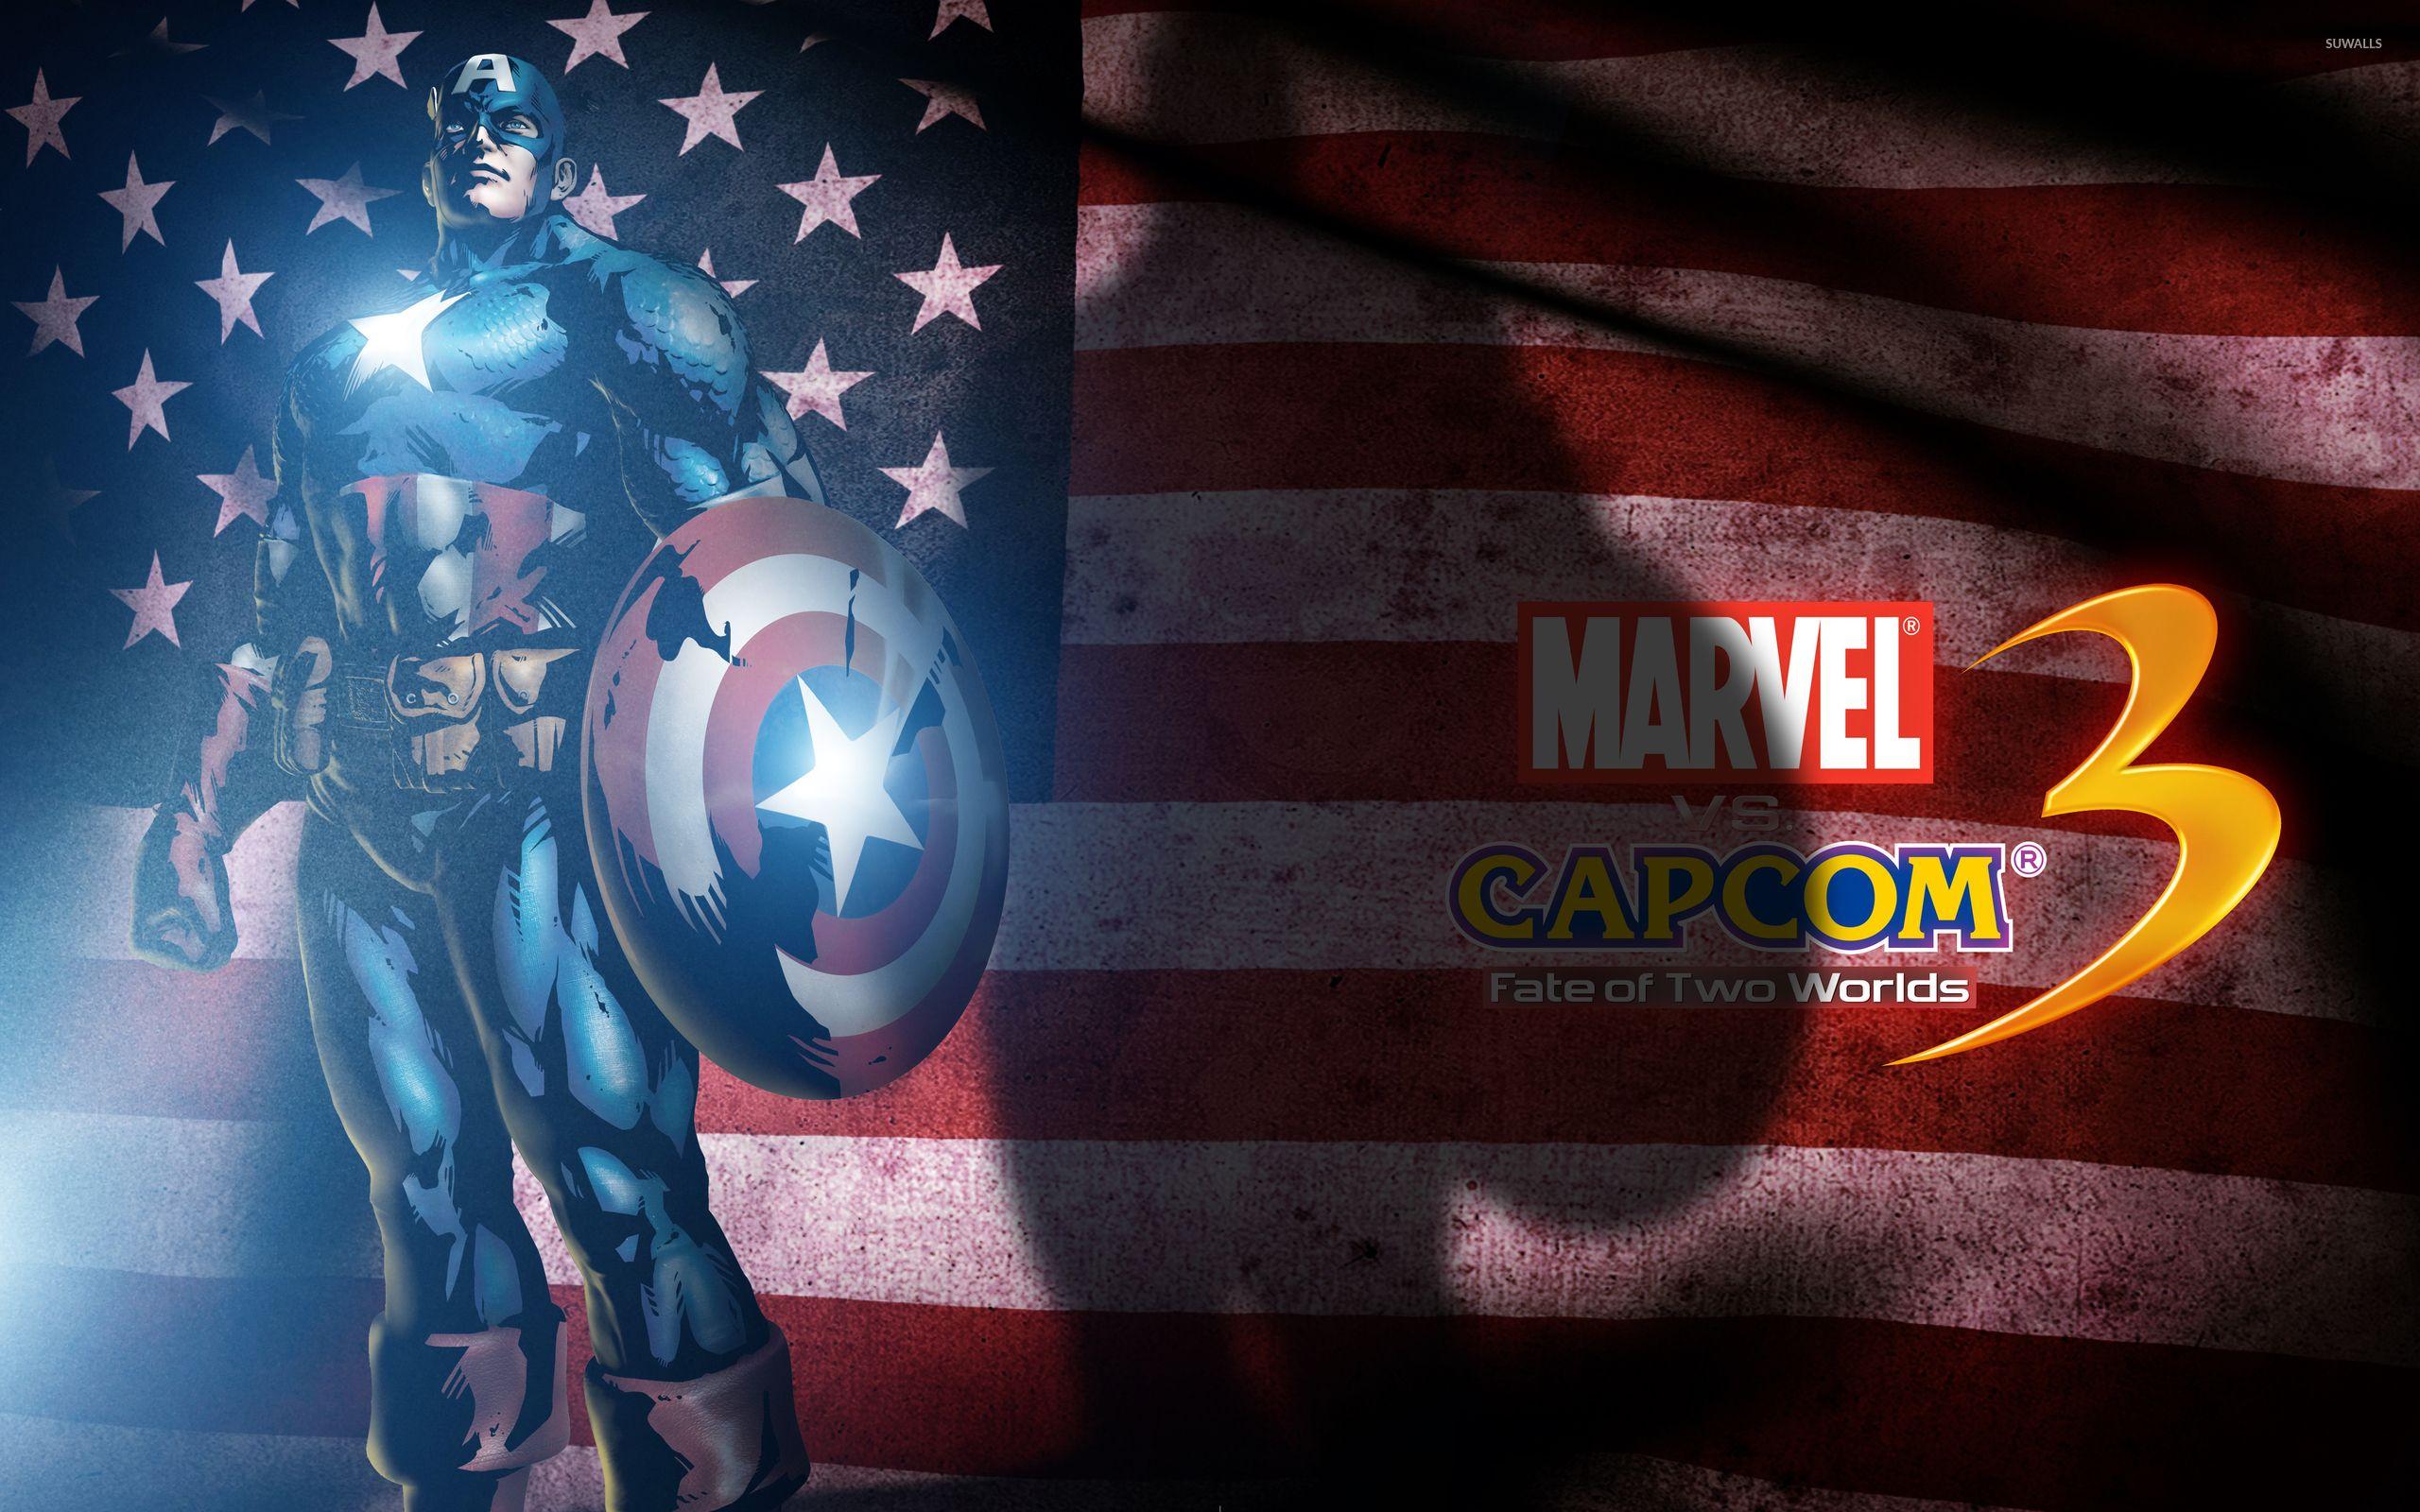 Marvel vs. Capcom Captain America wallpaper wallpaper